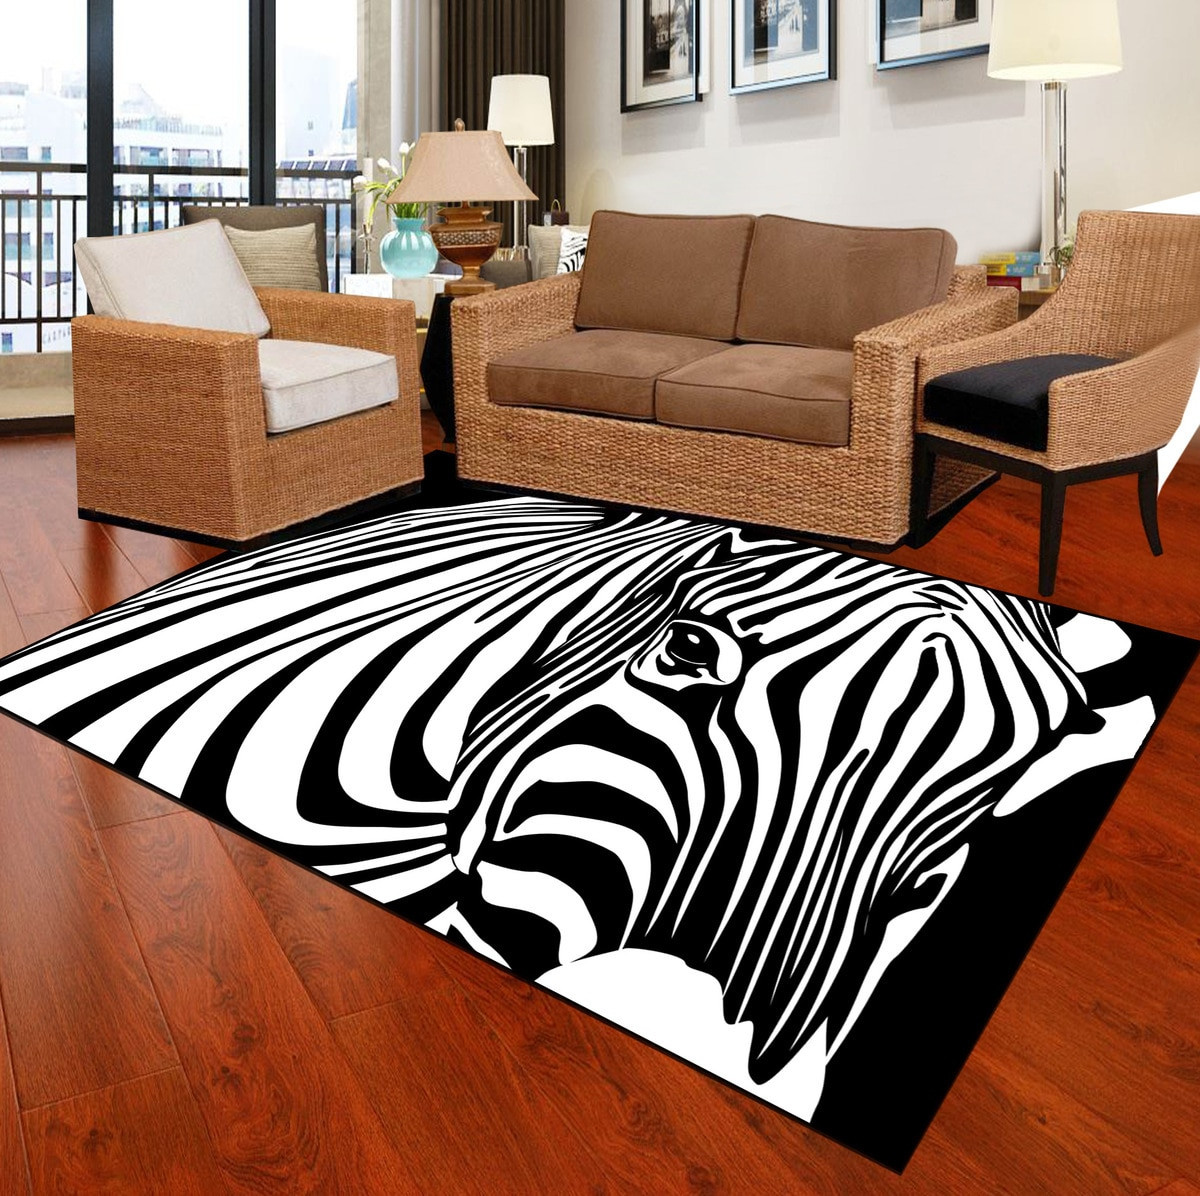 Large Rugs For Living Room
 Geometric Black And White Modern Area Rug Non Slip